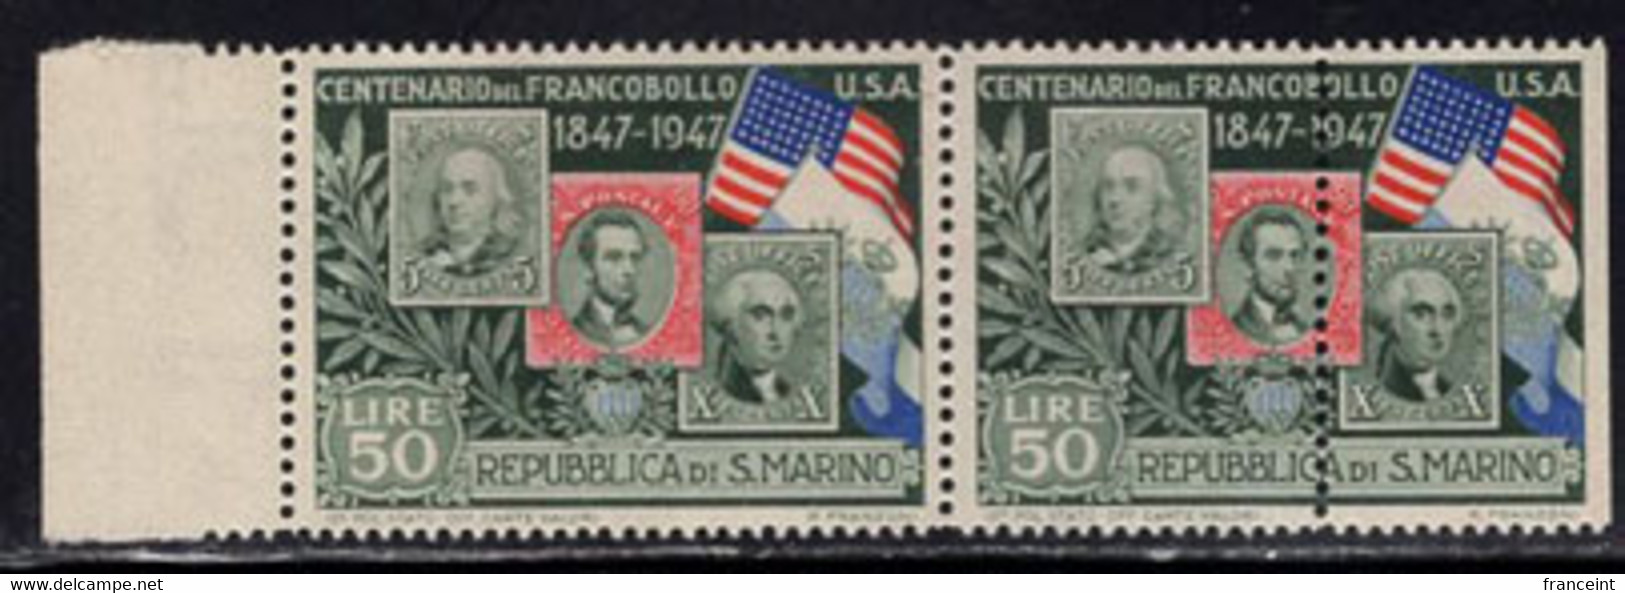 SAN MARINO(1947) US Stamps. Flag. Pair Misperforated Vertically. Scott No 271, Yvert No 313. - Varietà & Curiosità